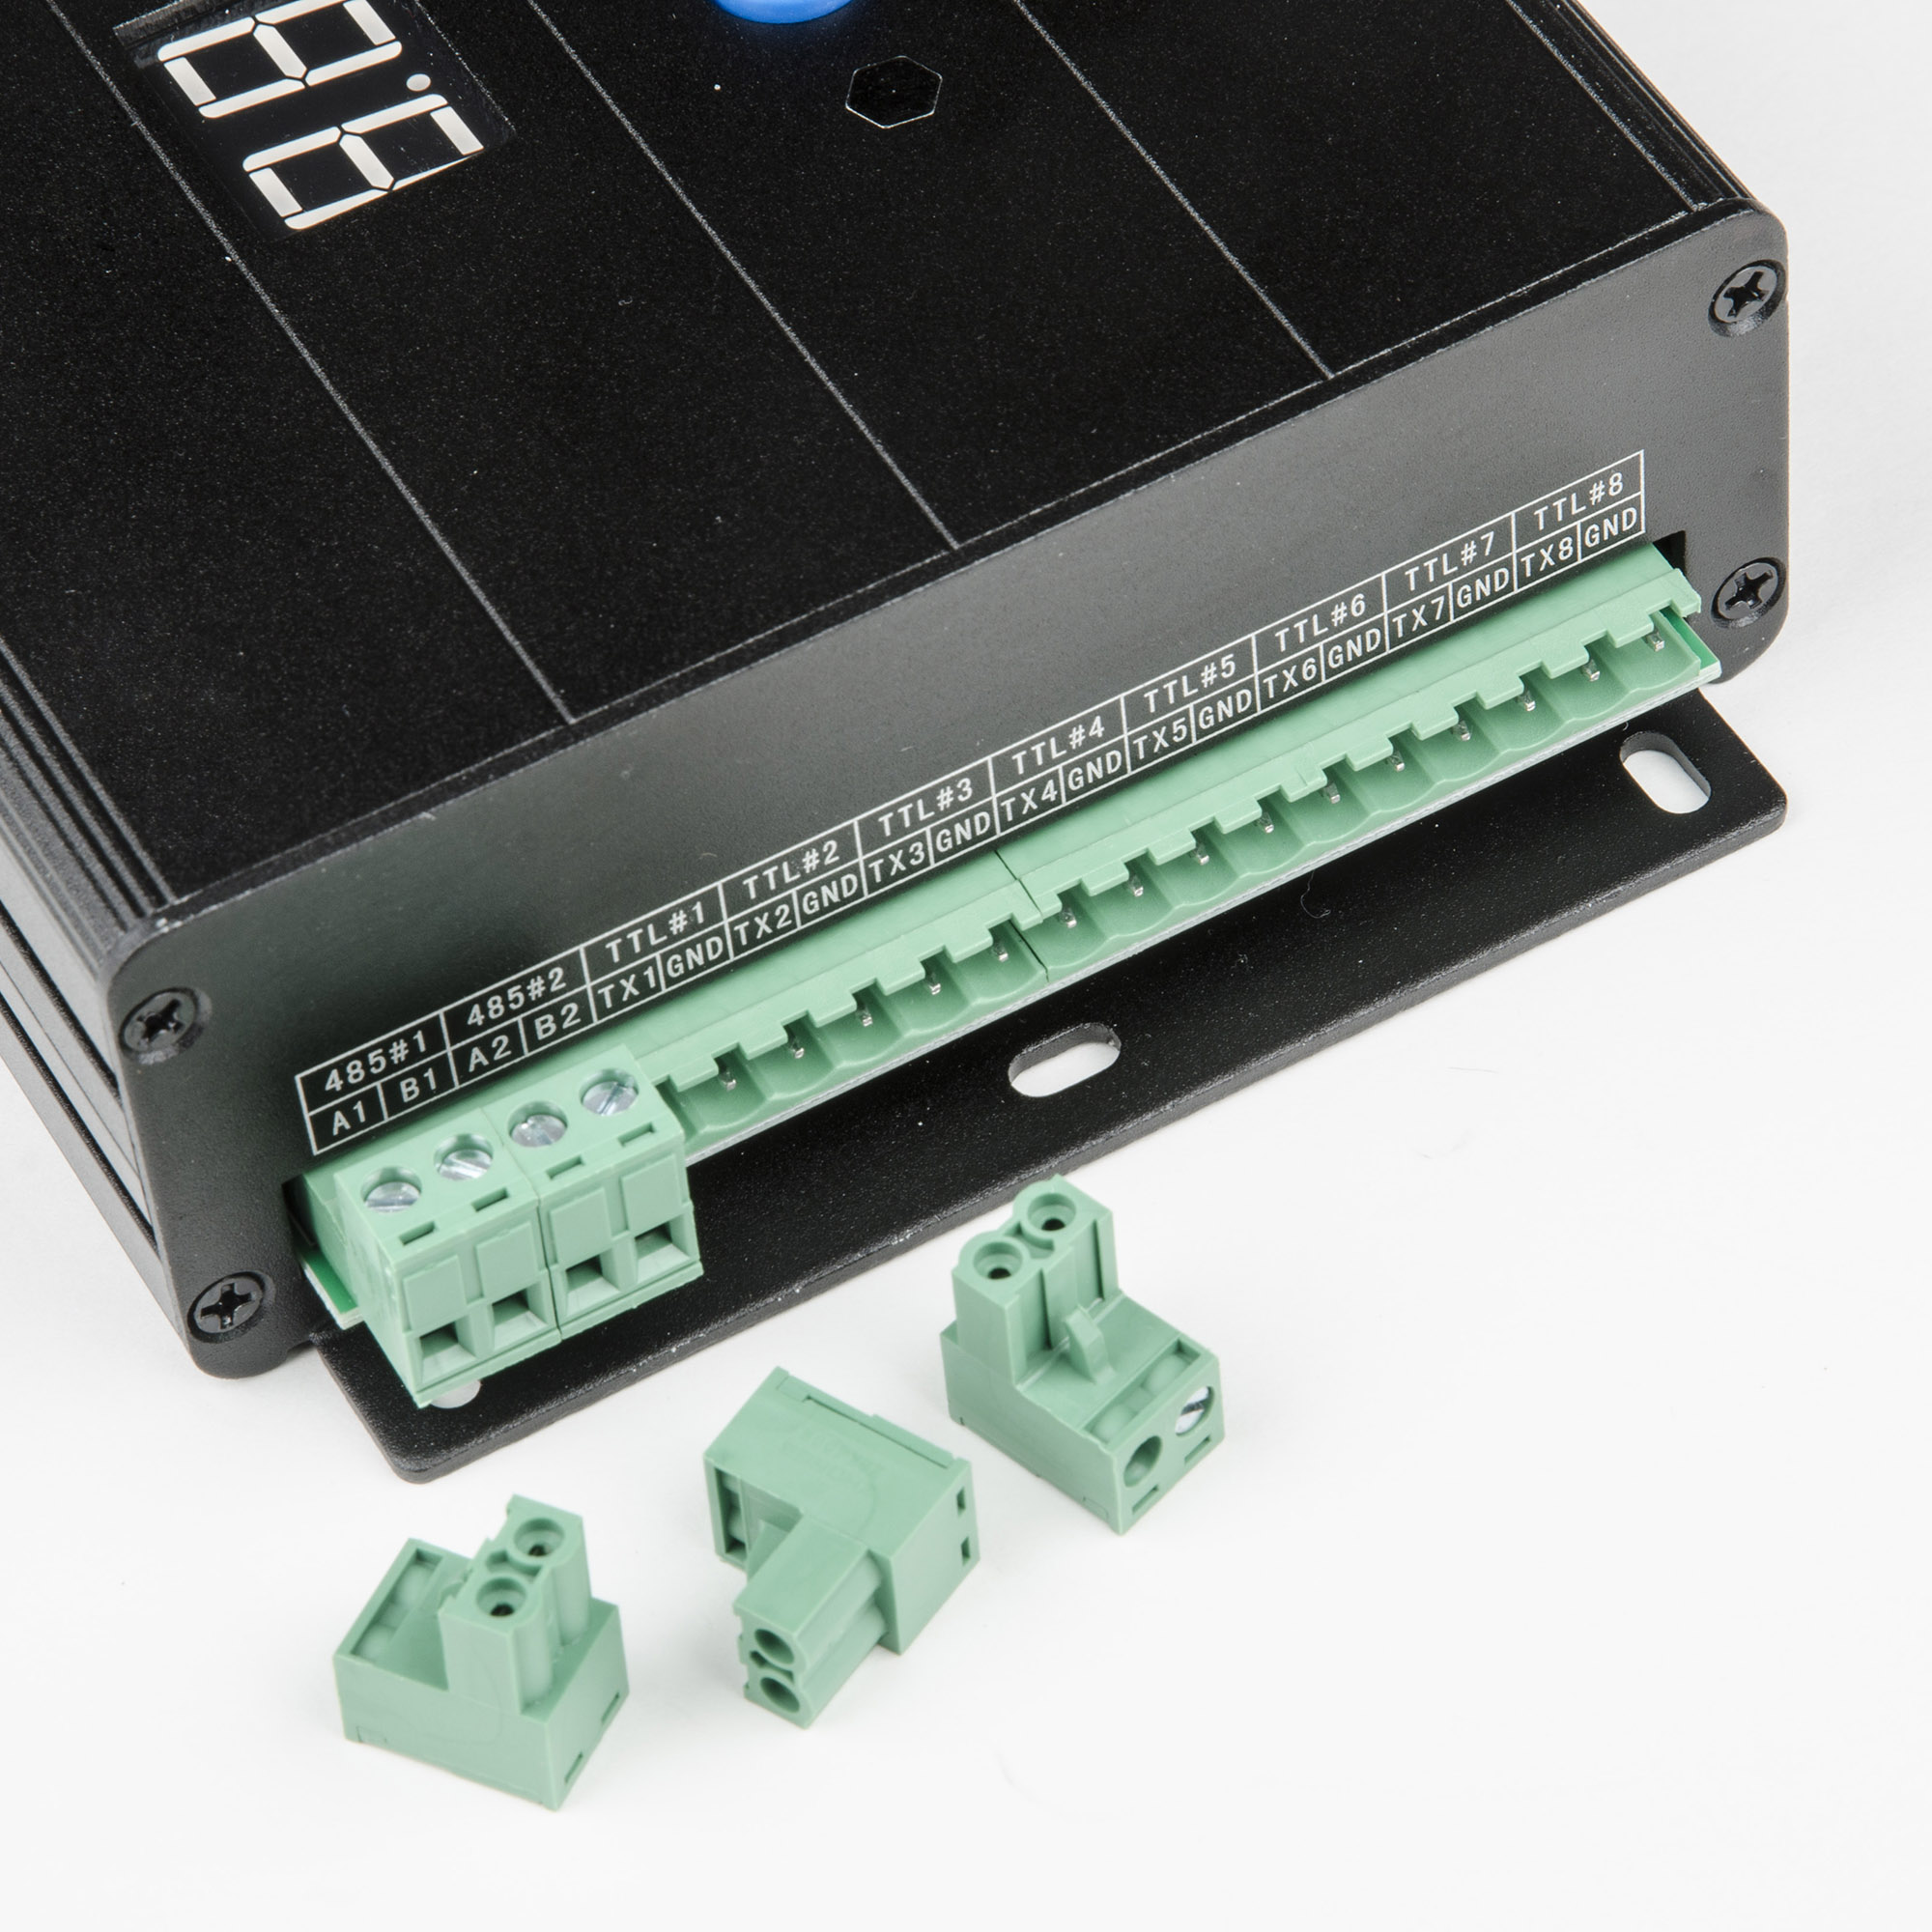 ULC-L52 RGB-DC24V BLACK Контроллер DMX для управления RGB прожекторами серии ULF-L52 DC24V. TM Uniel